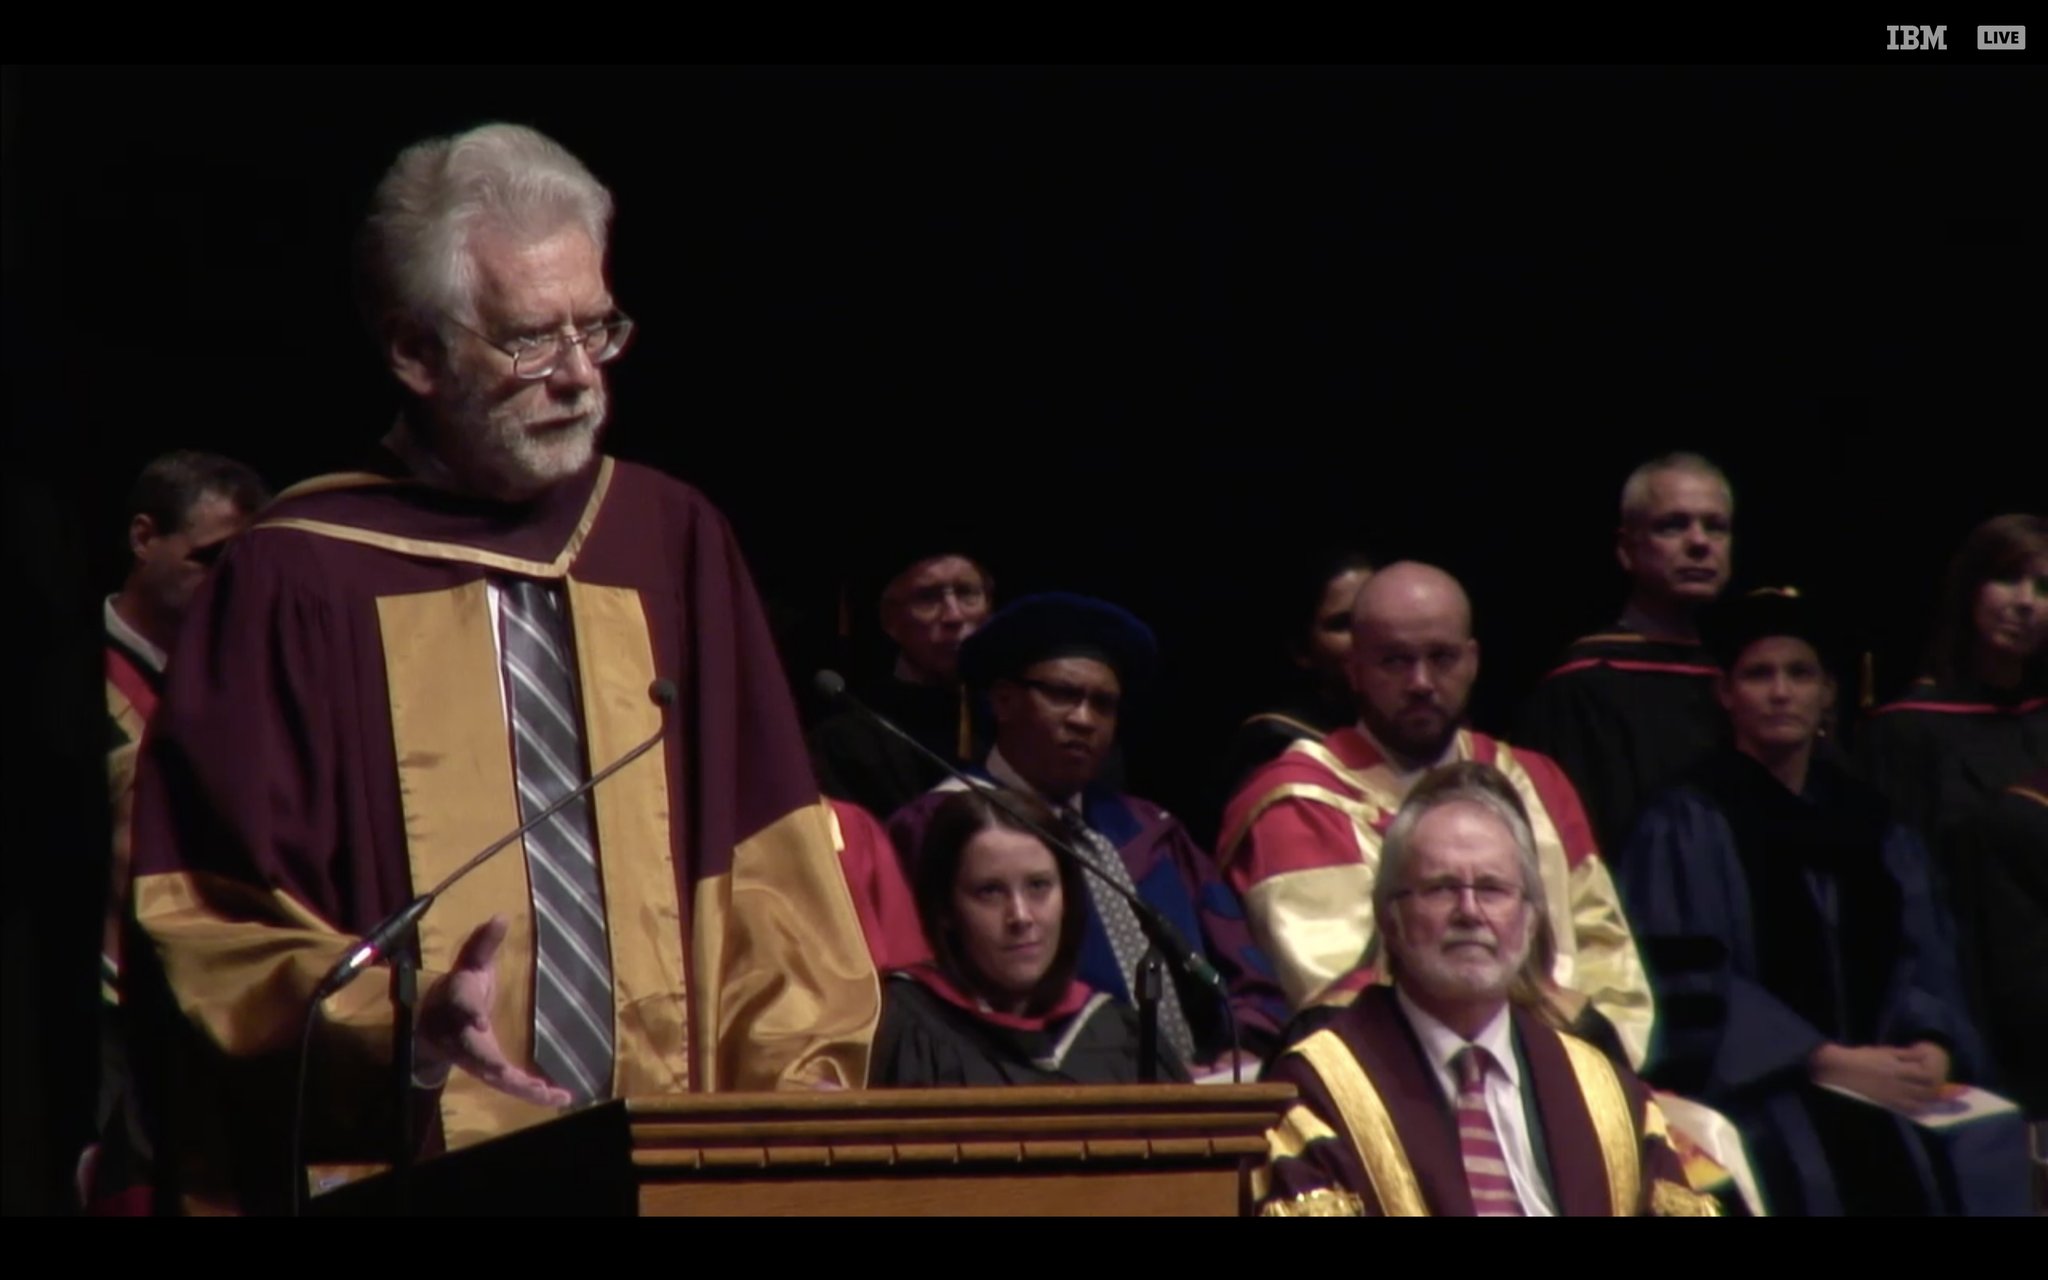 Dr. Bill Harris delivering their speech